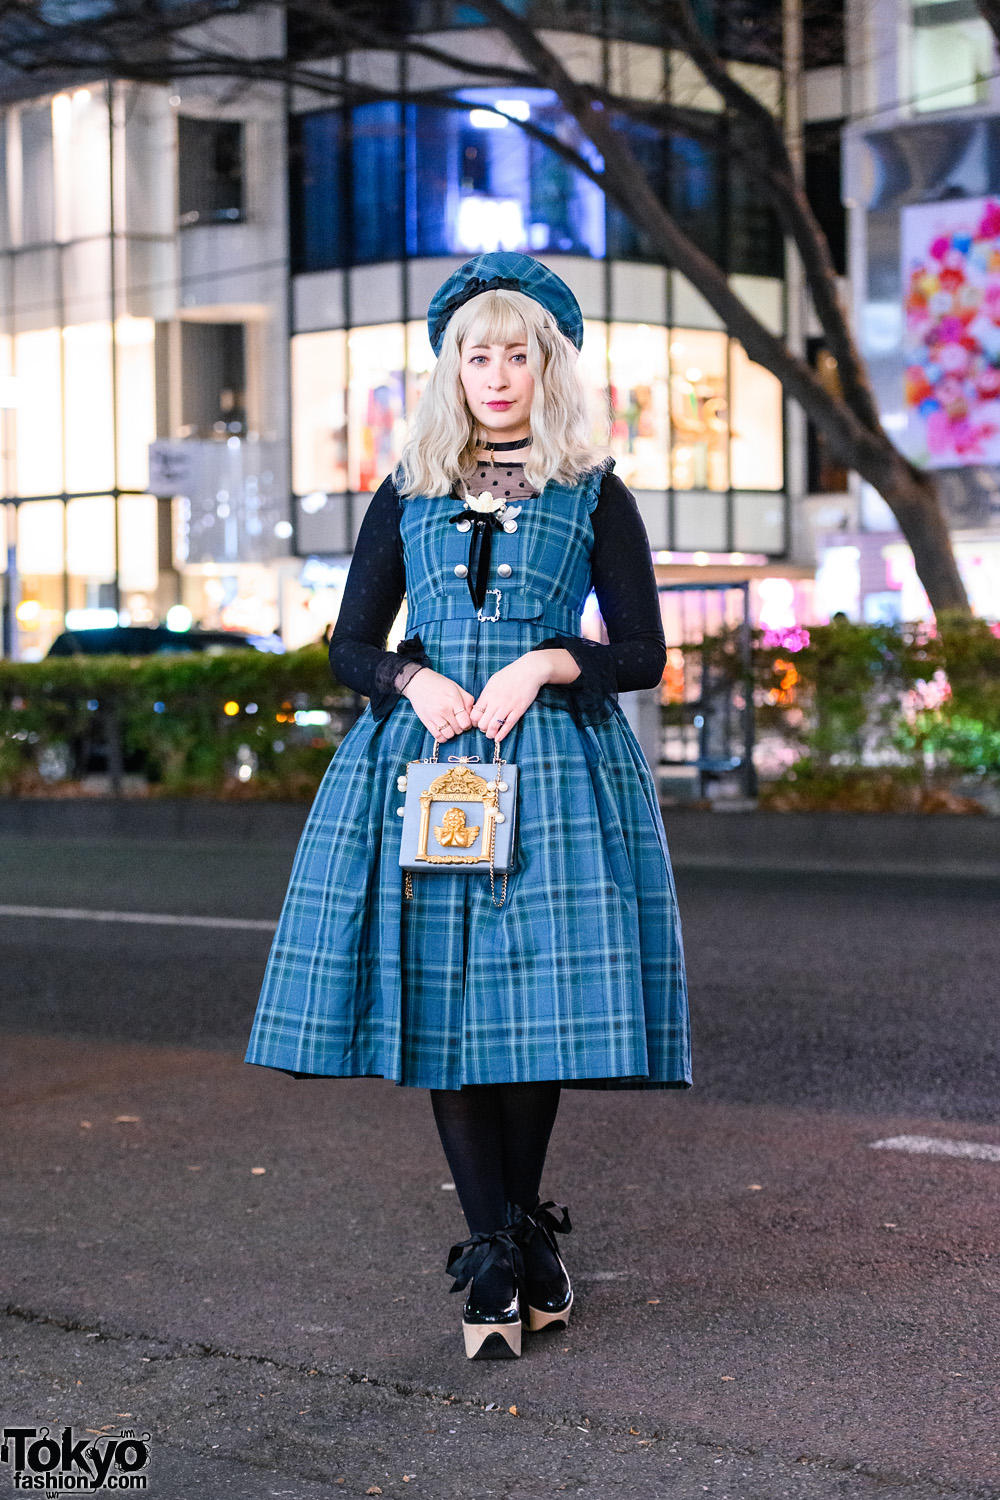 Harajuku Streetwear Style w/ Plaid Beret, Sheer Polka-Dot Top, Belted Plaid Dress, Anna Sui & Vivienne Westwood x Melissa Rocking Horse Shoes